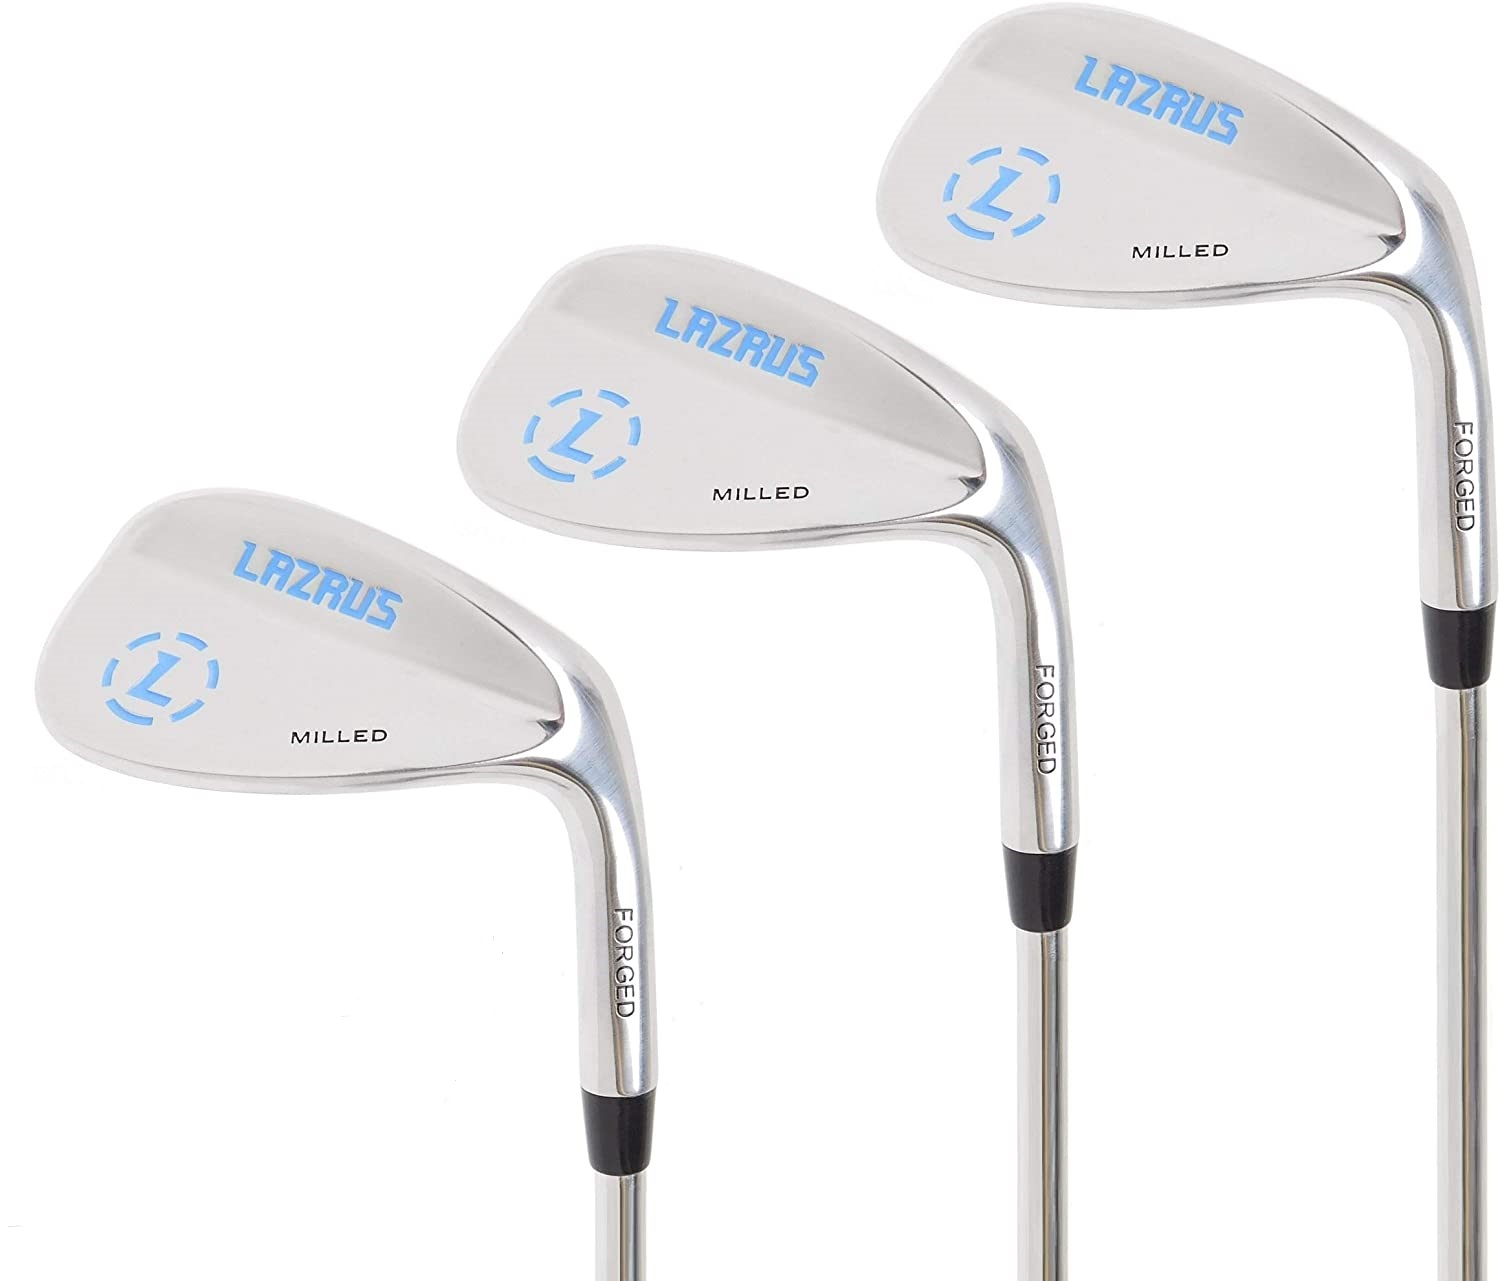 LAZRUS Premium Forged Golf Wedge Set Review